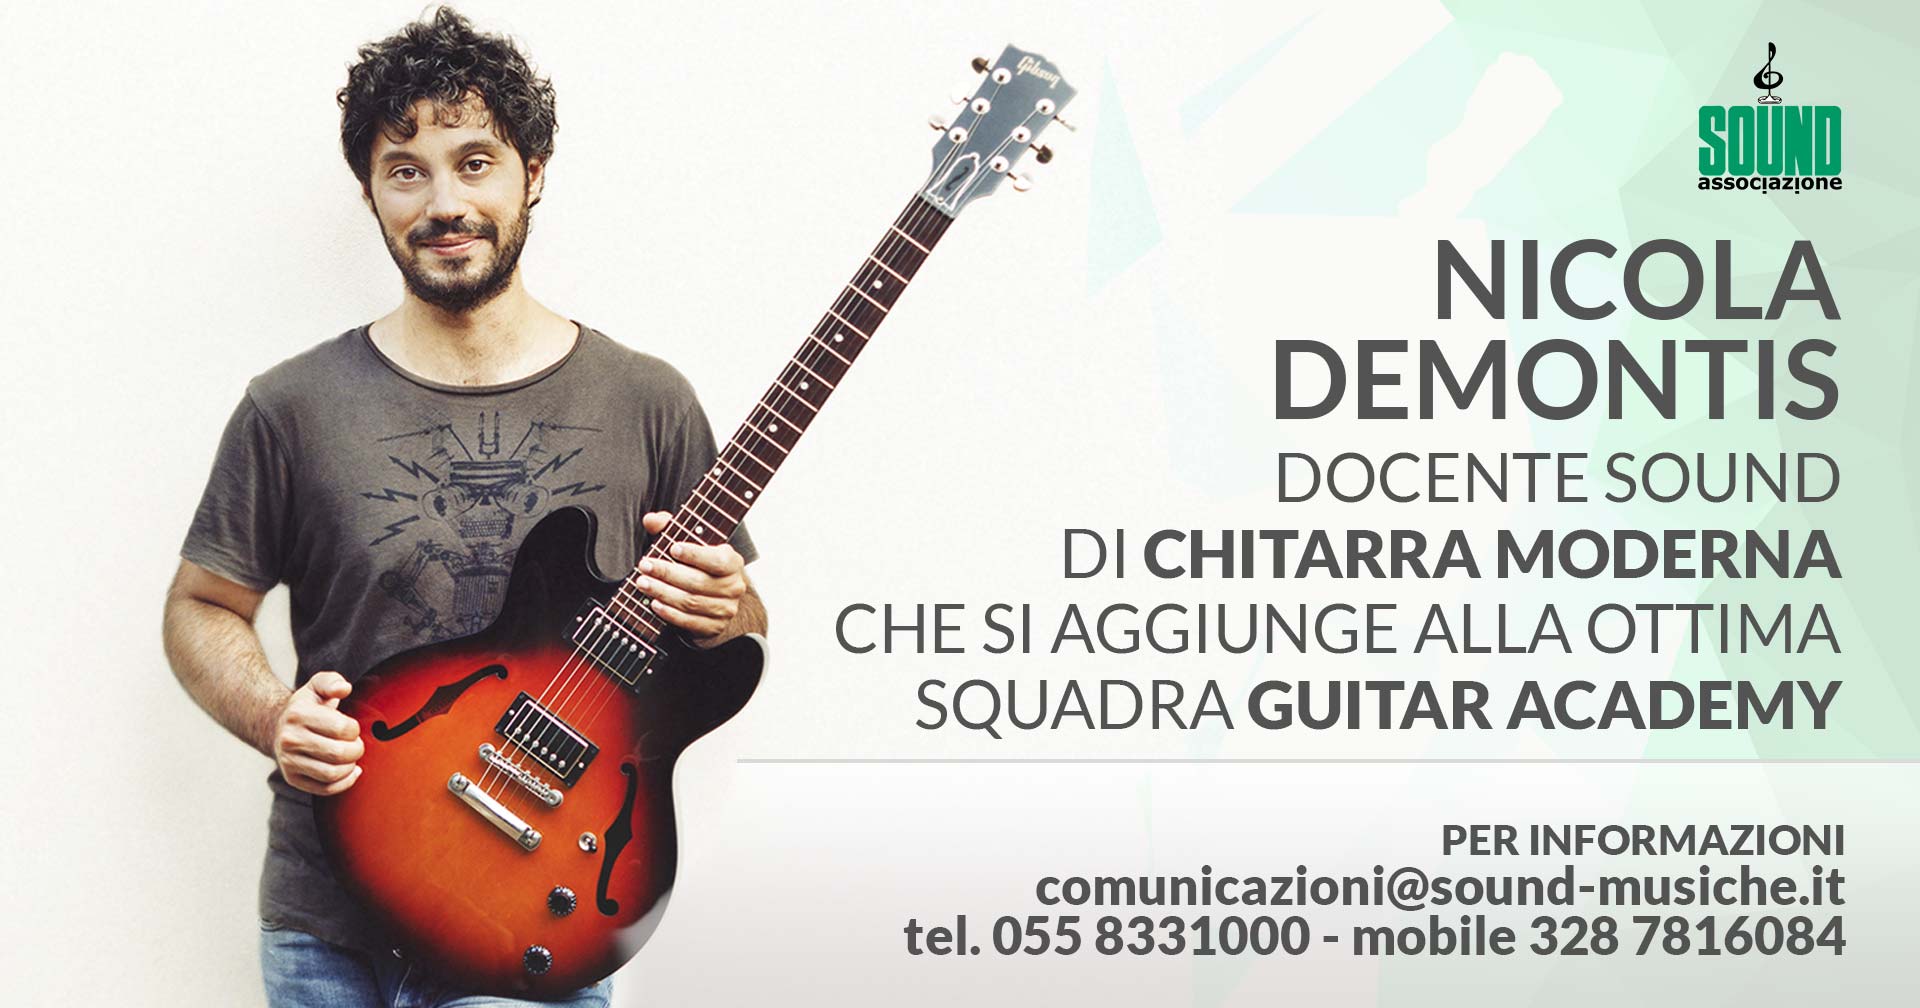 Nicola Demontis nuovo docente di chitarra moderna Sound